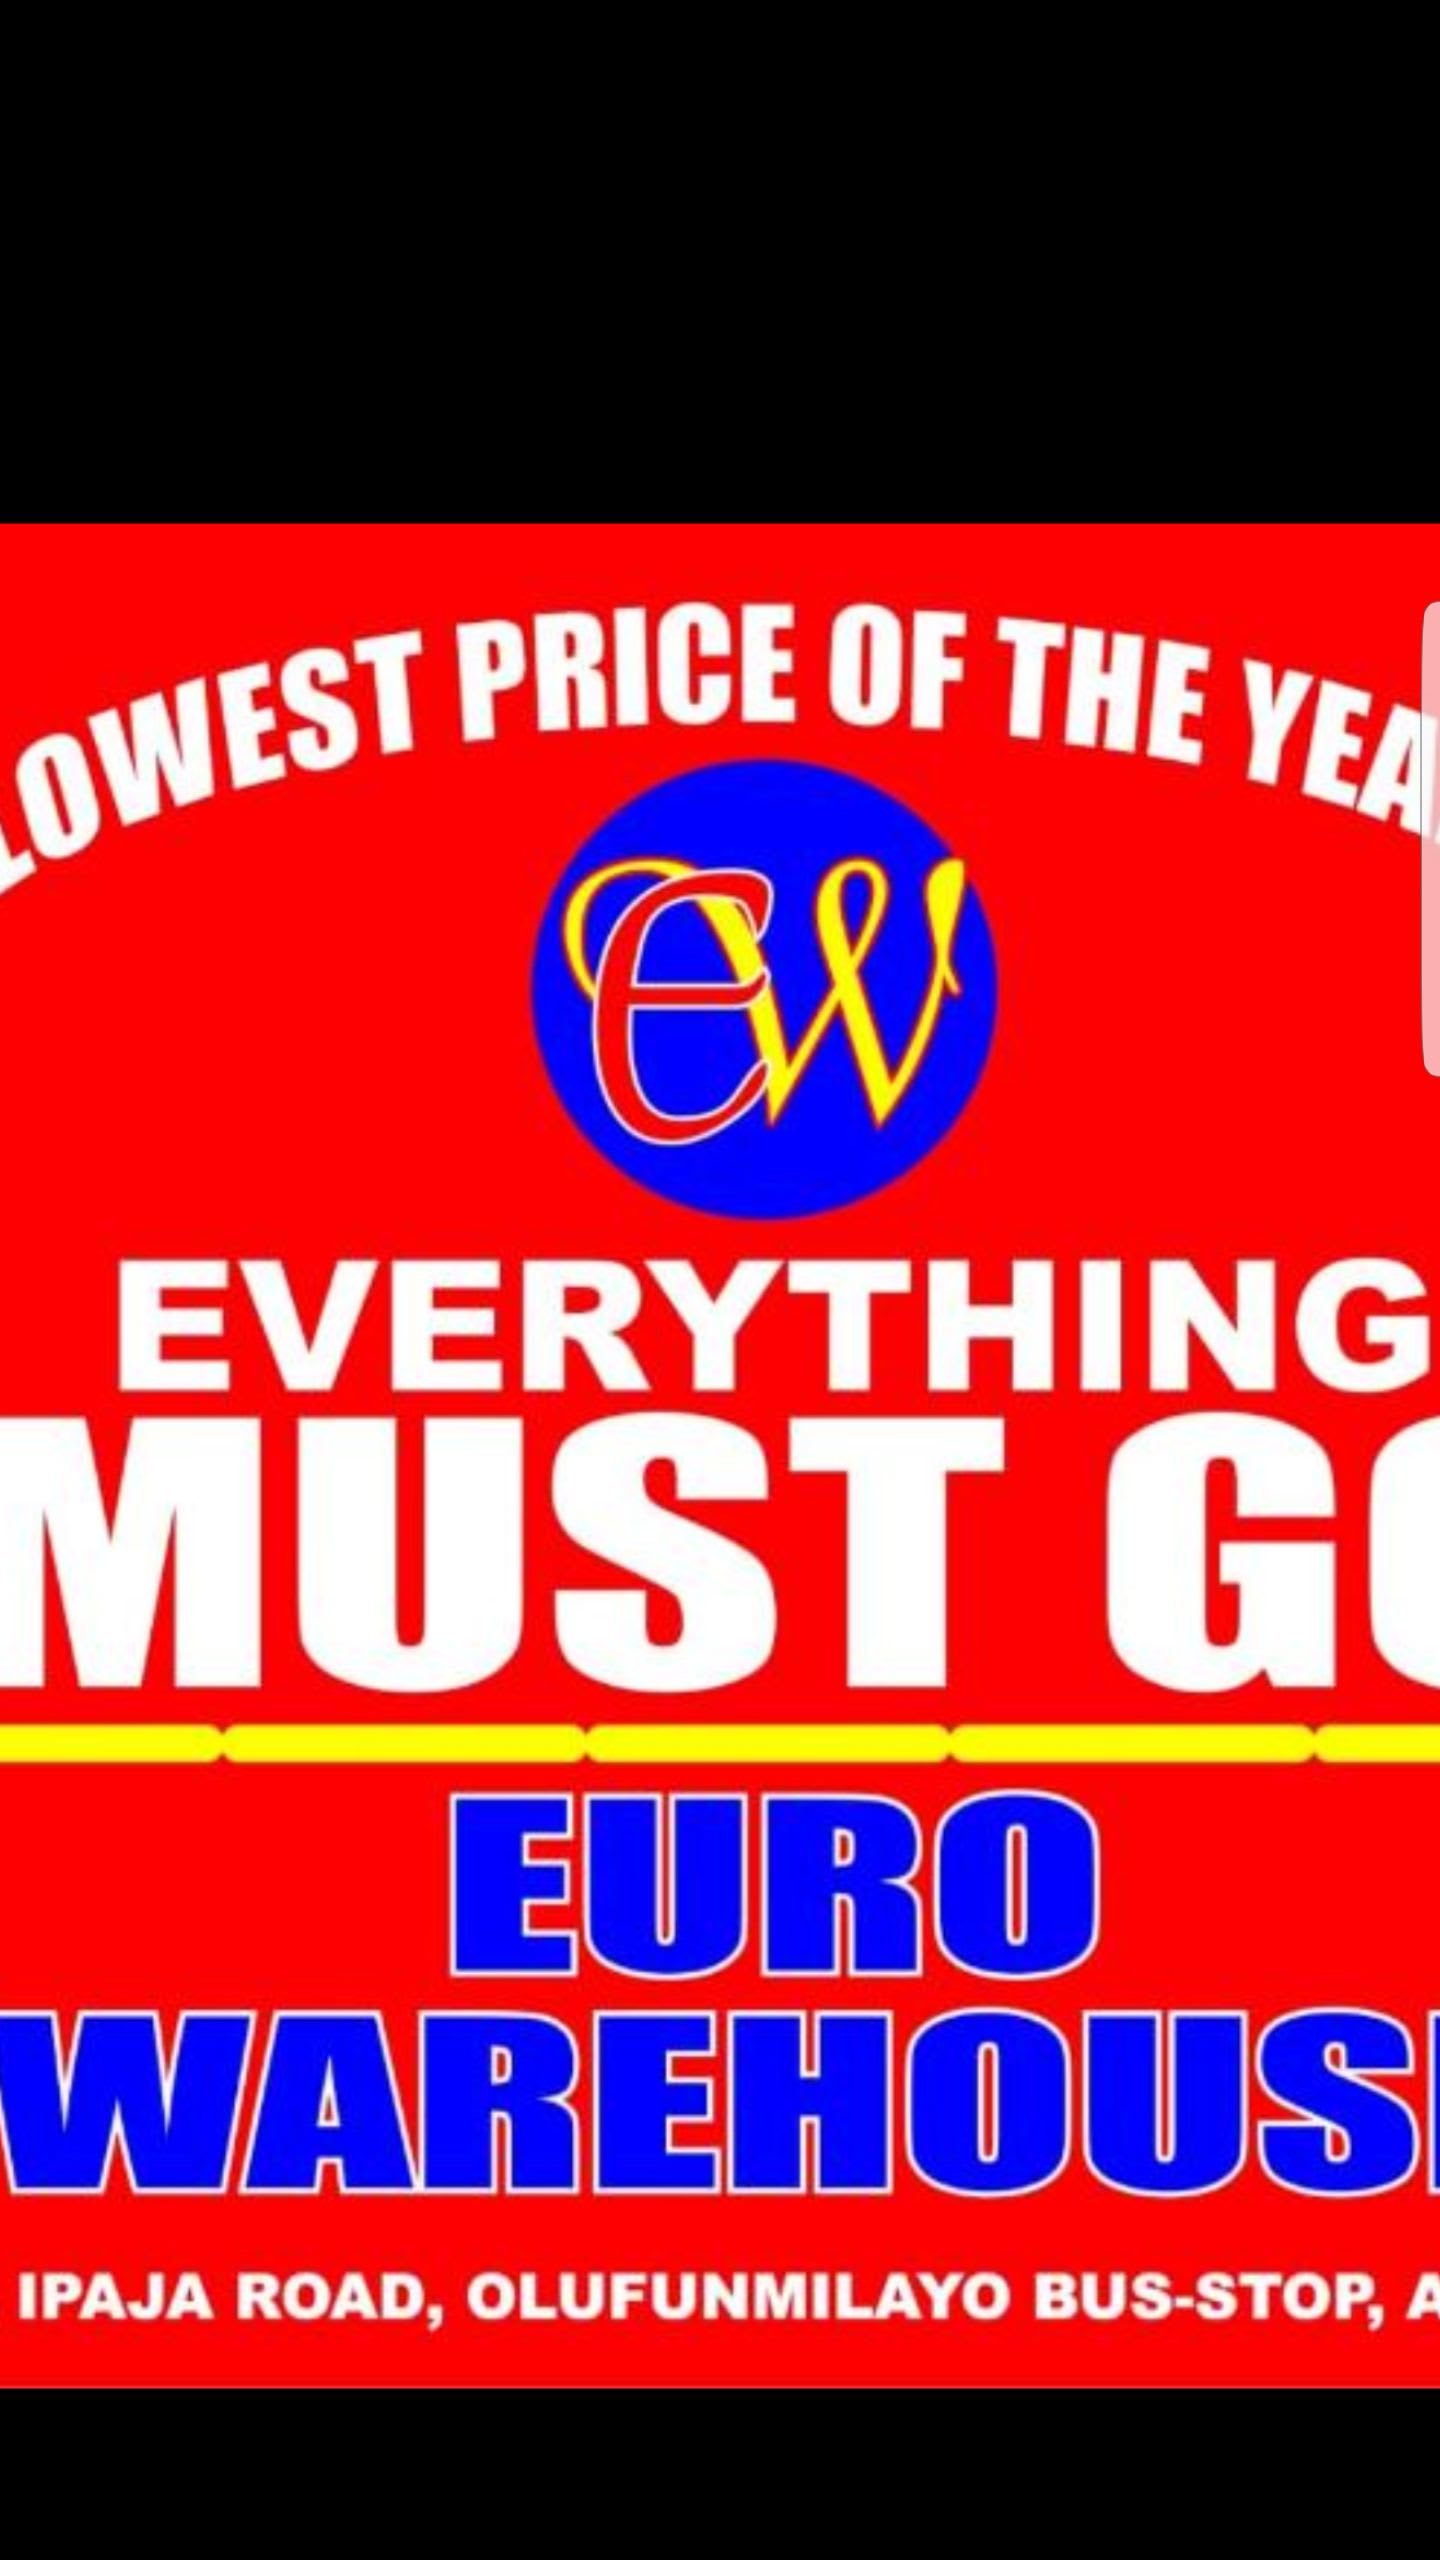 Euro Warehouse